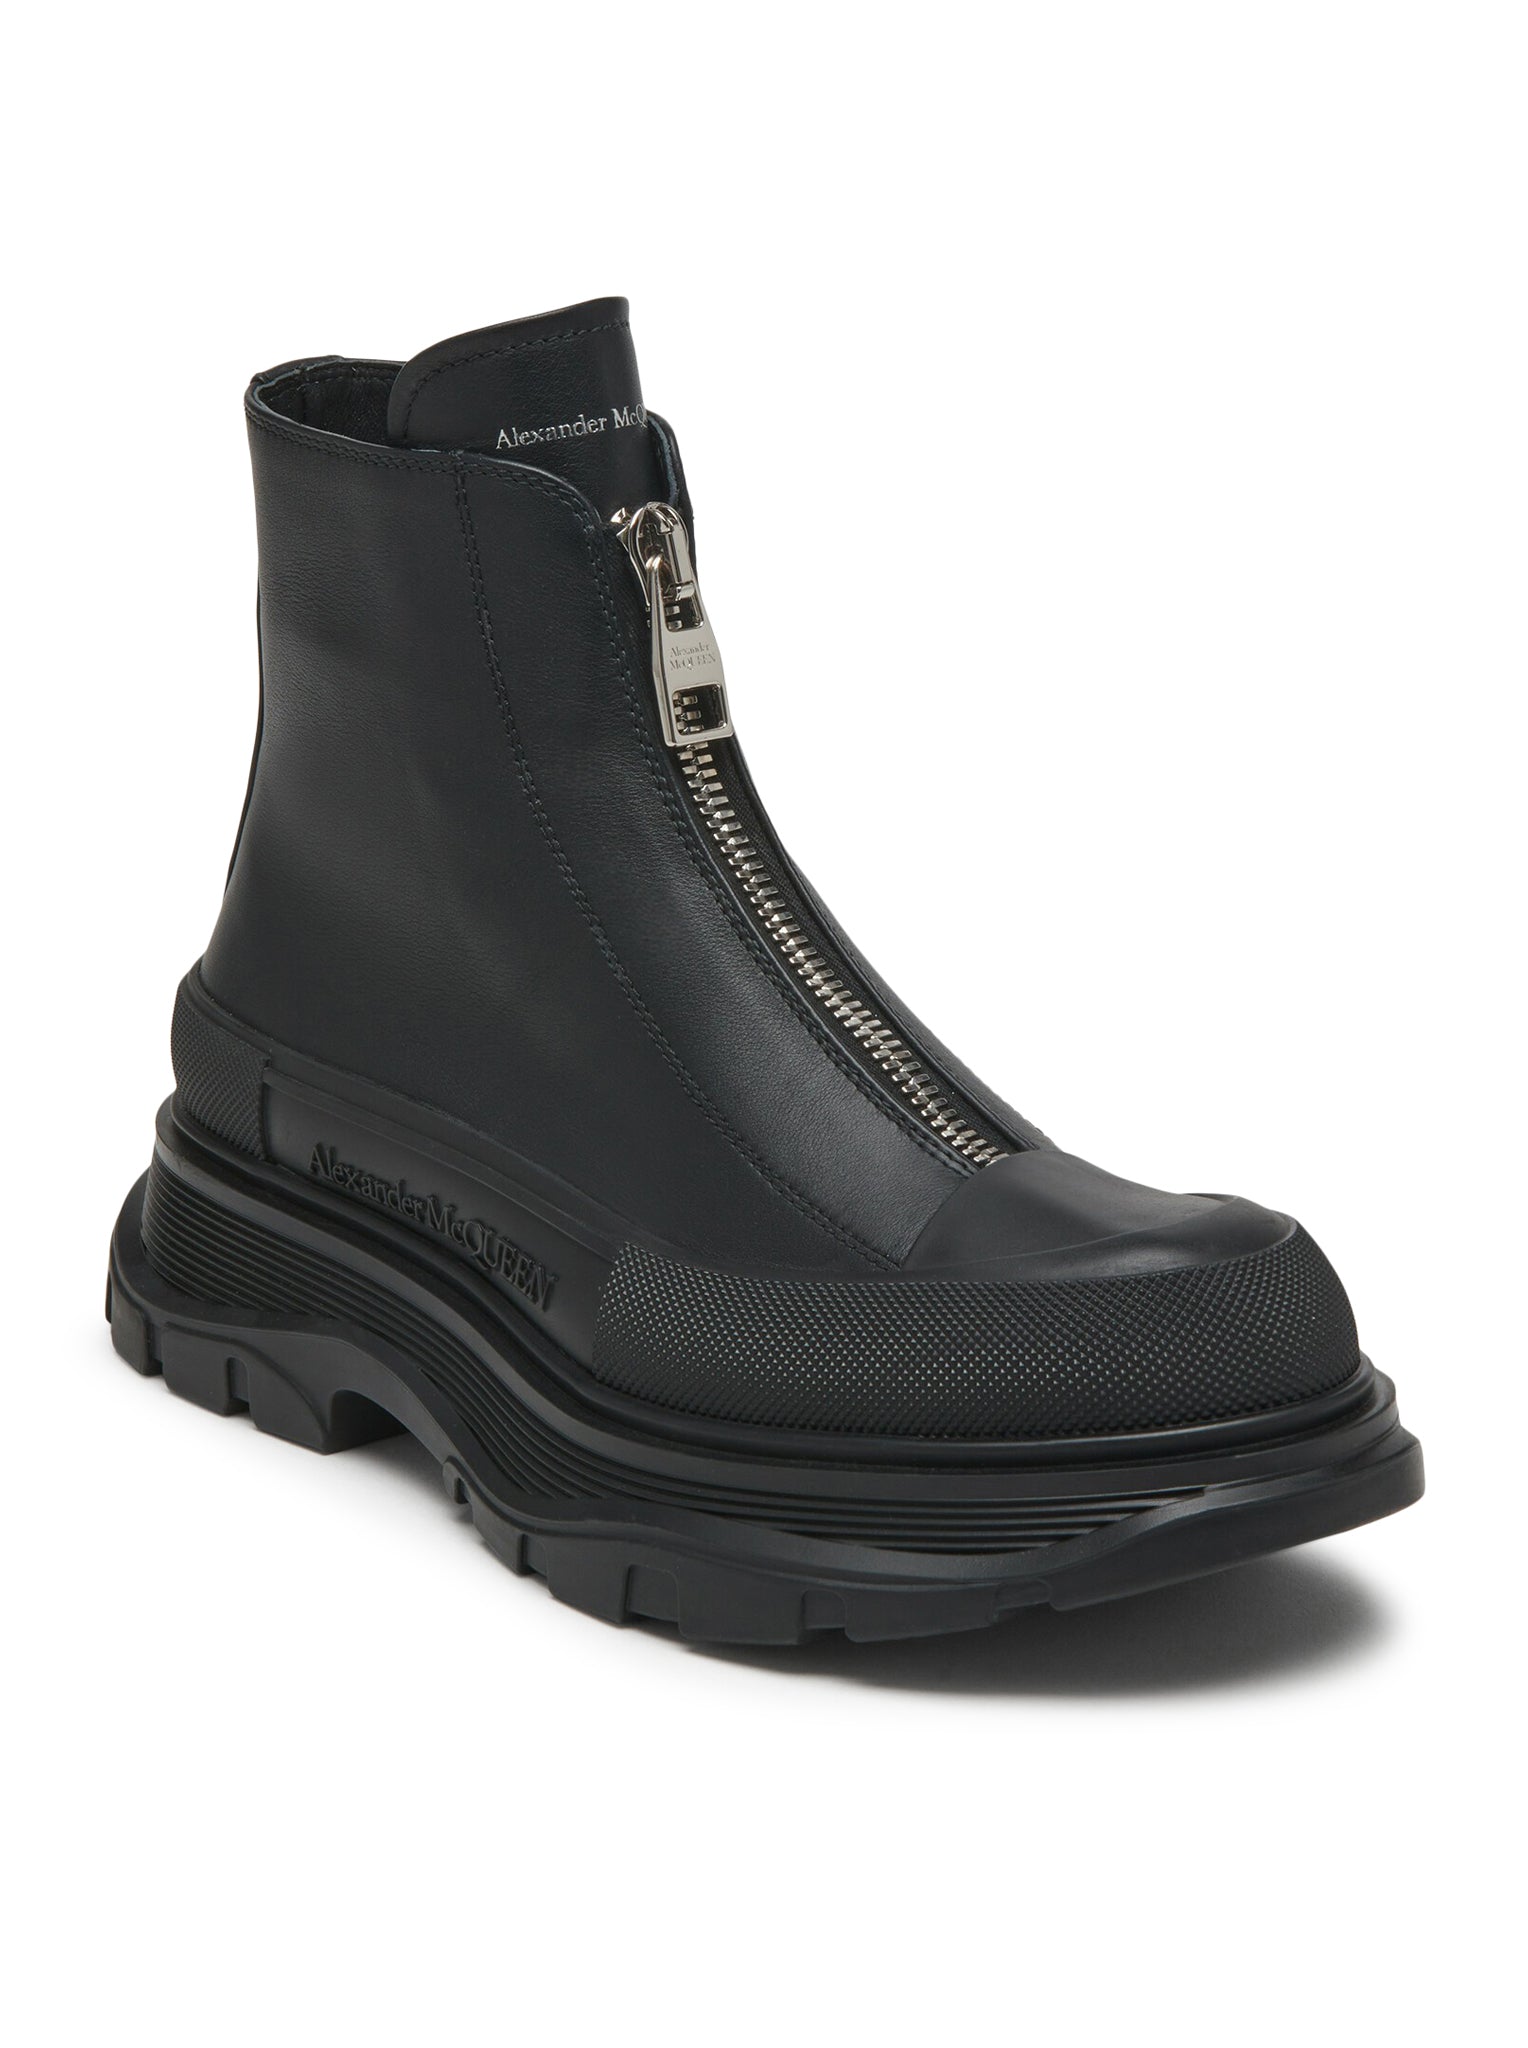 Zip Tread Slick Ankle Boots for Women in Black